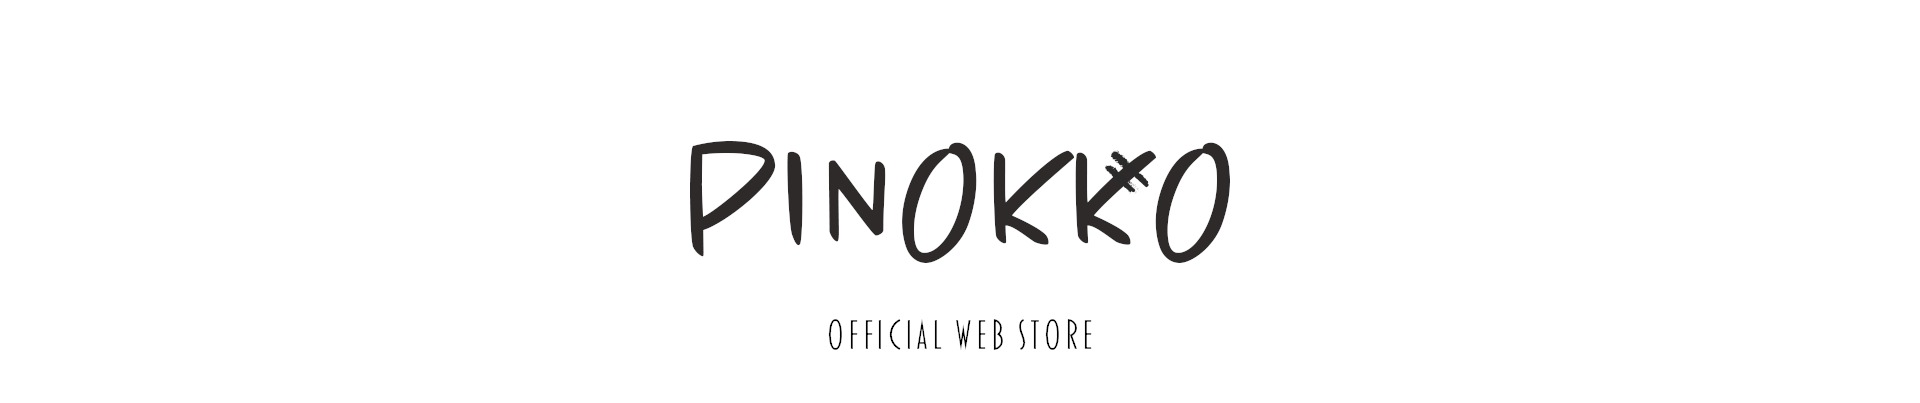 Pinokko OFFICIAL WEB STORE